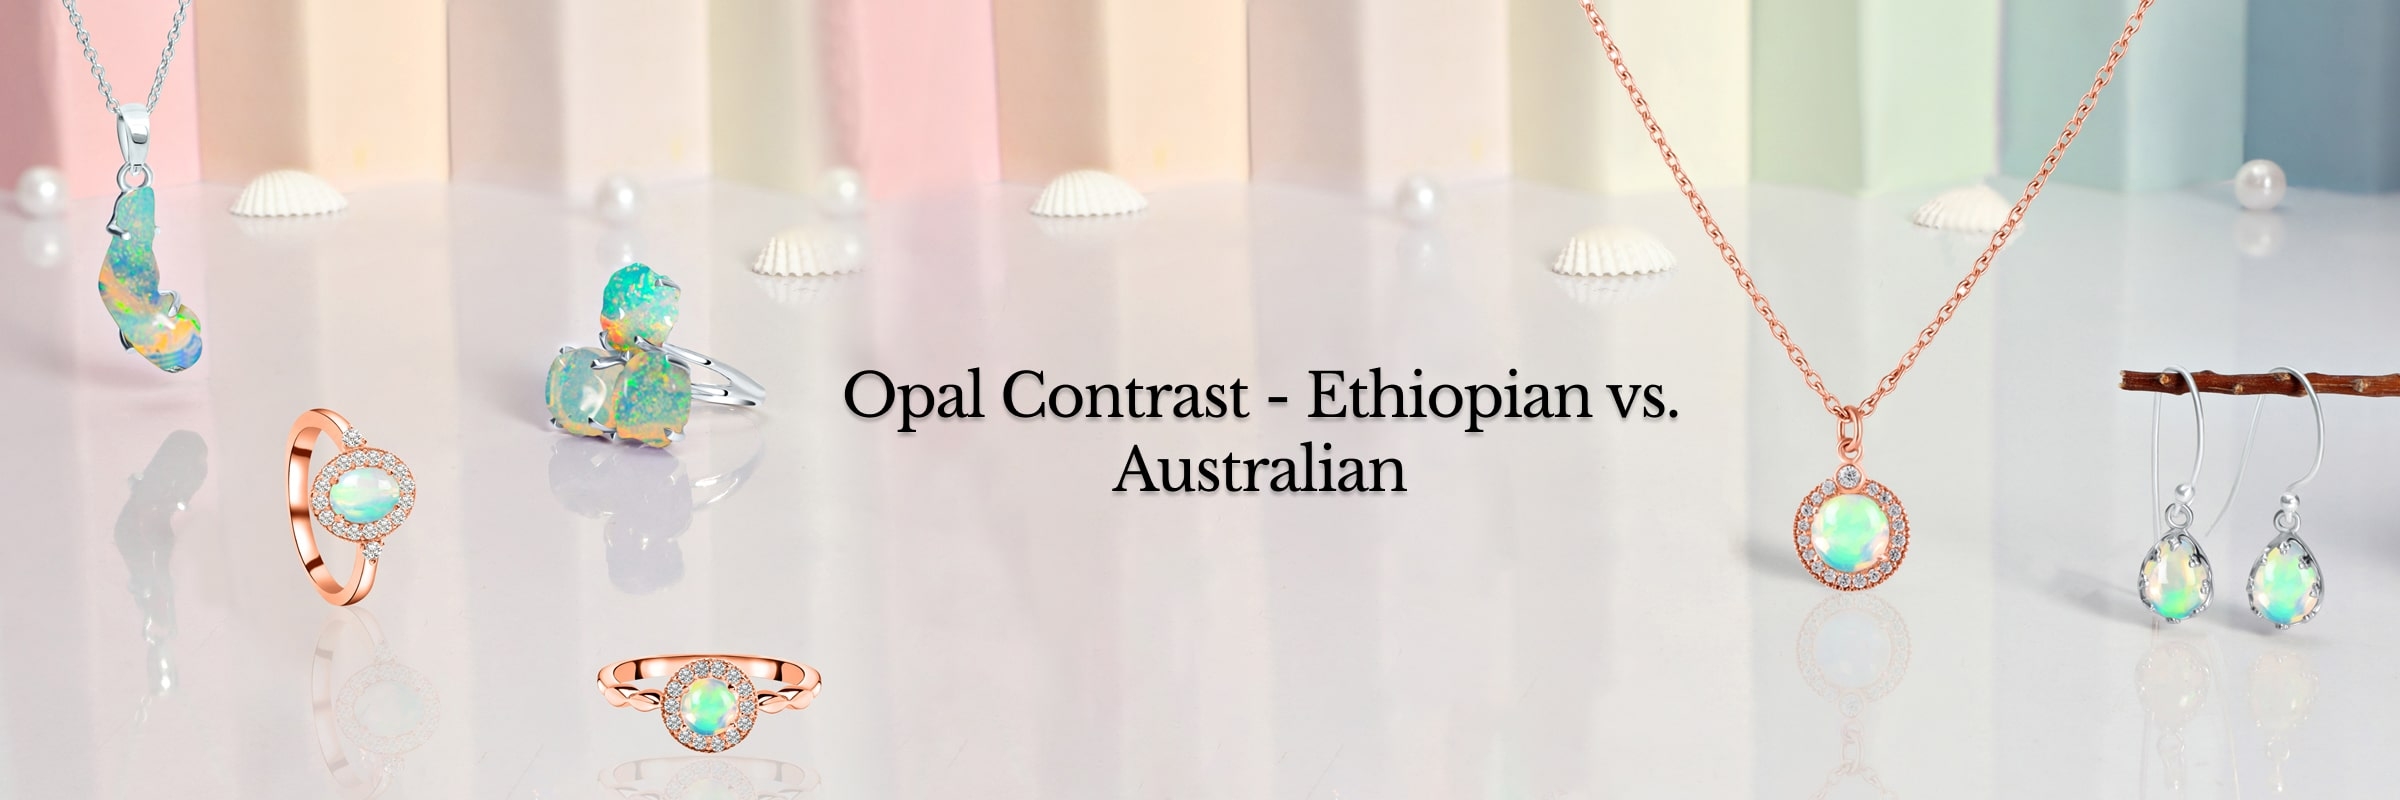 Ethiopian opal and Australian opal